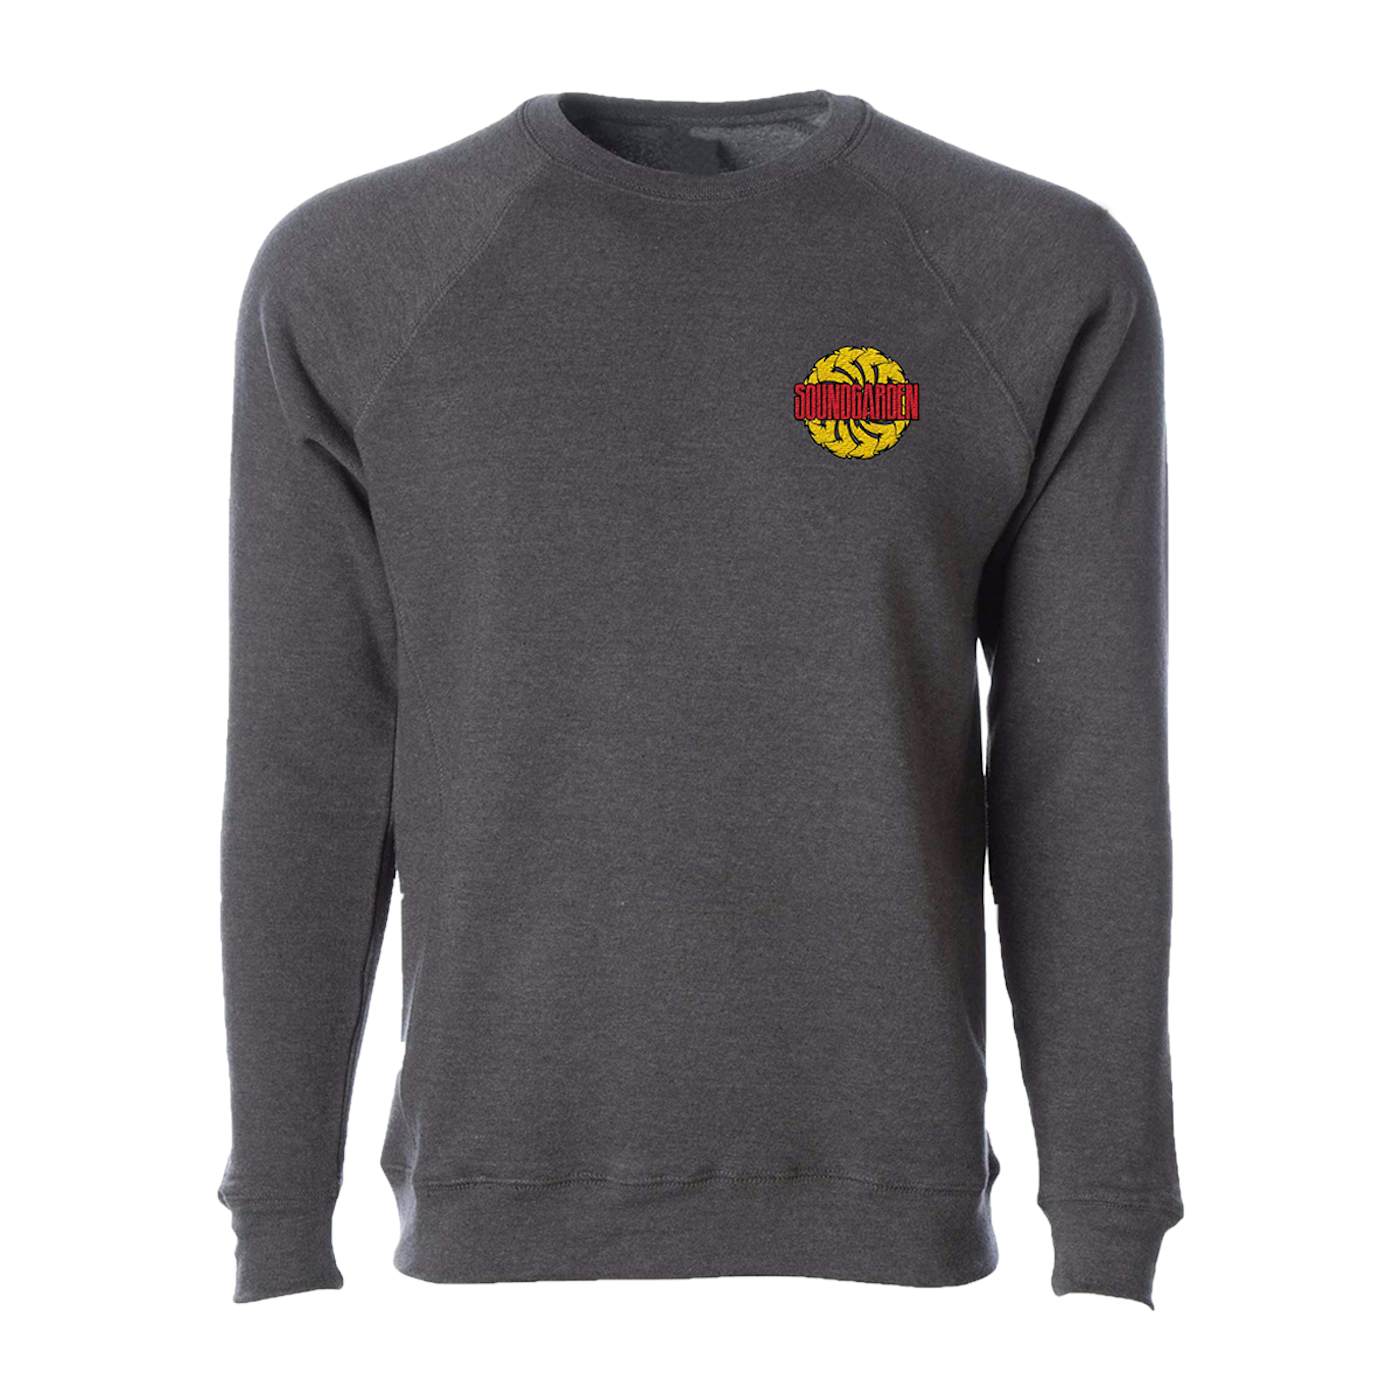 Soundgarden Sawblade Carbon Embroidered Crewneck Sweater